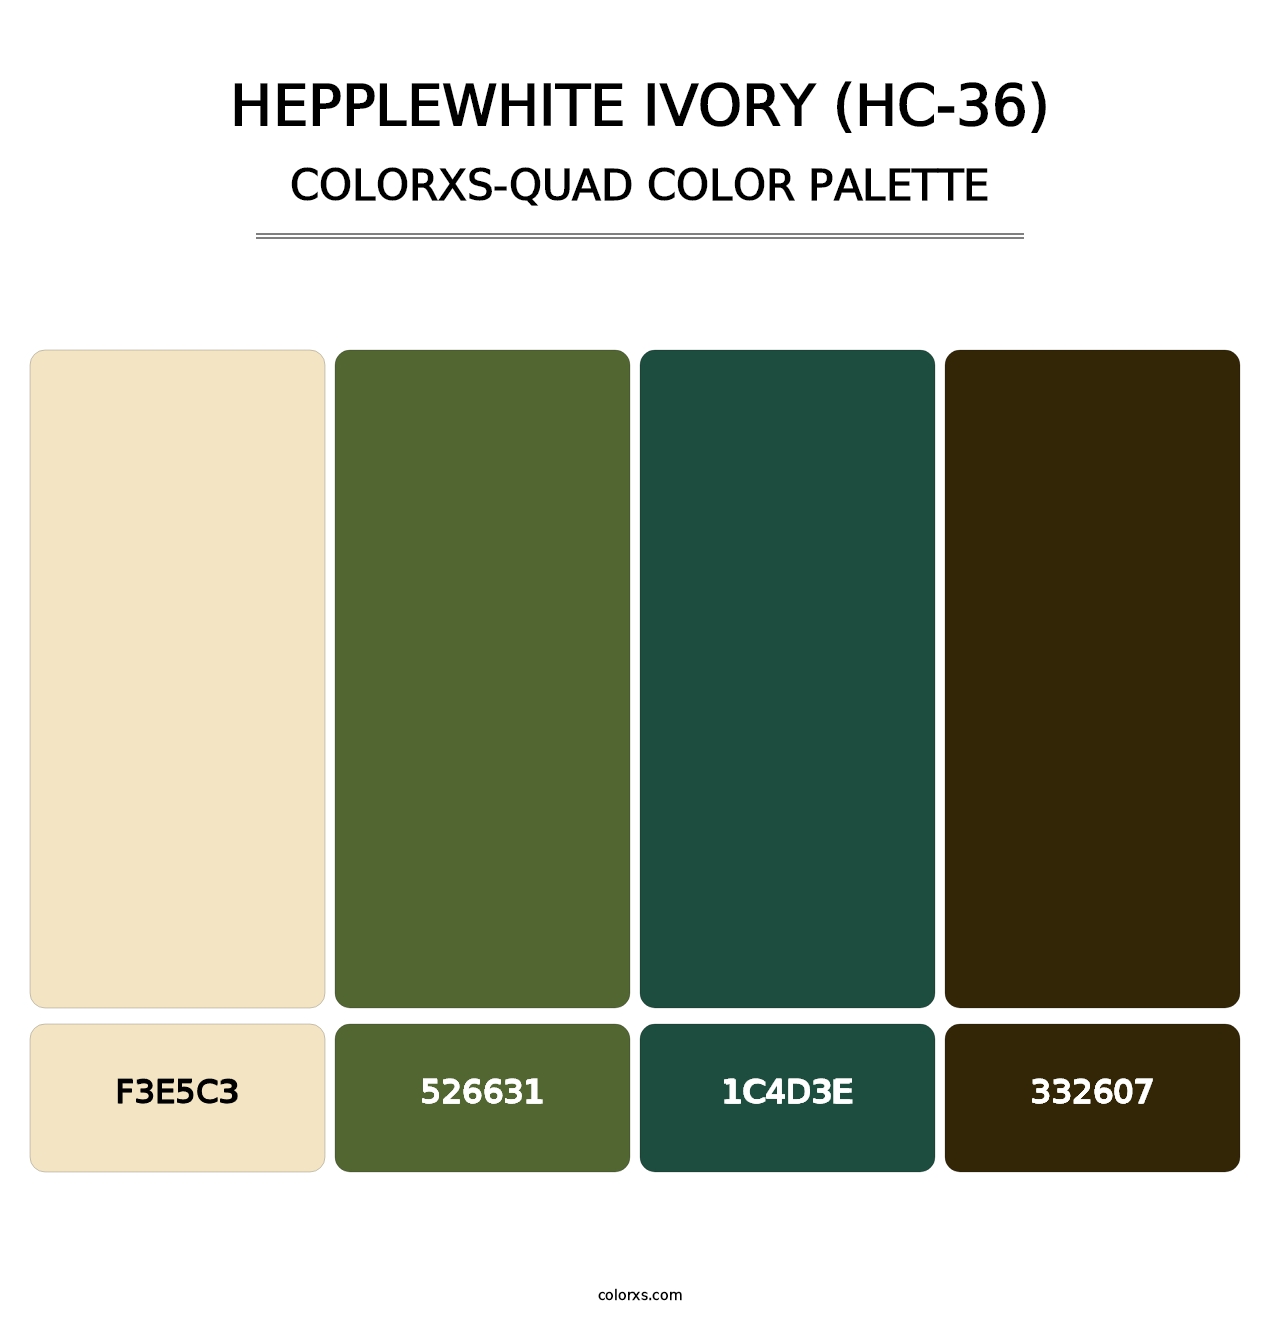 Hepplewhite Ivory (HC-36) - Colorxs Quad Palette